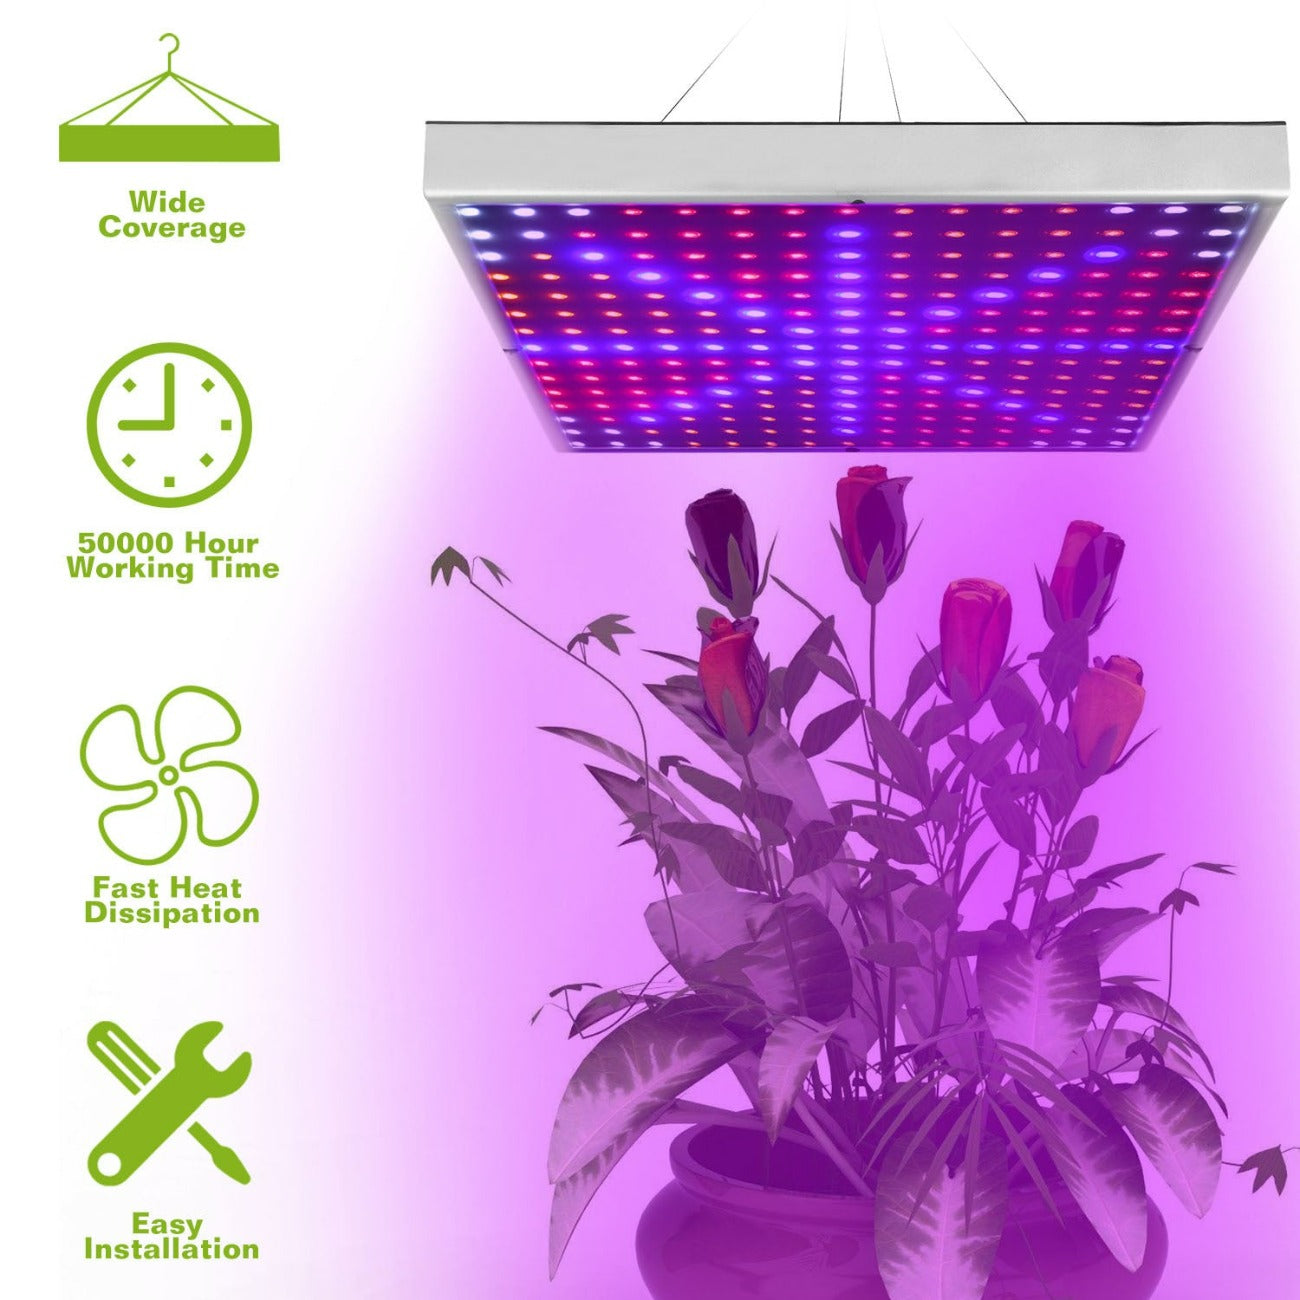 Hanging Grow Lights for Plants